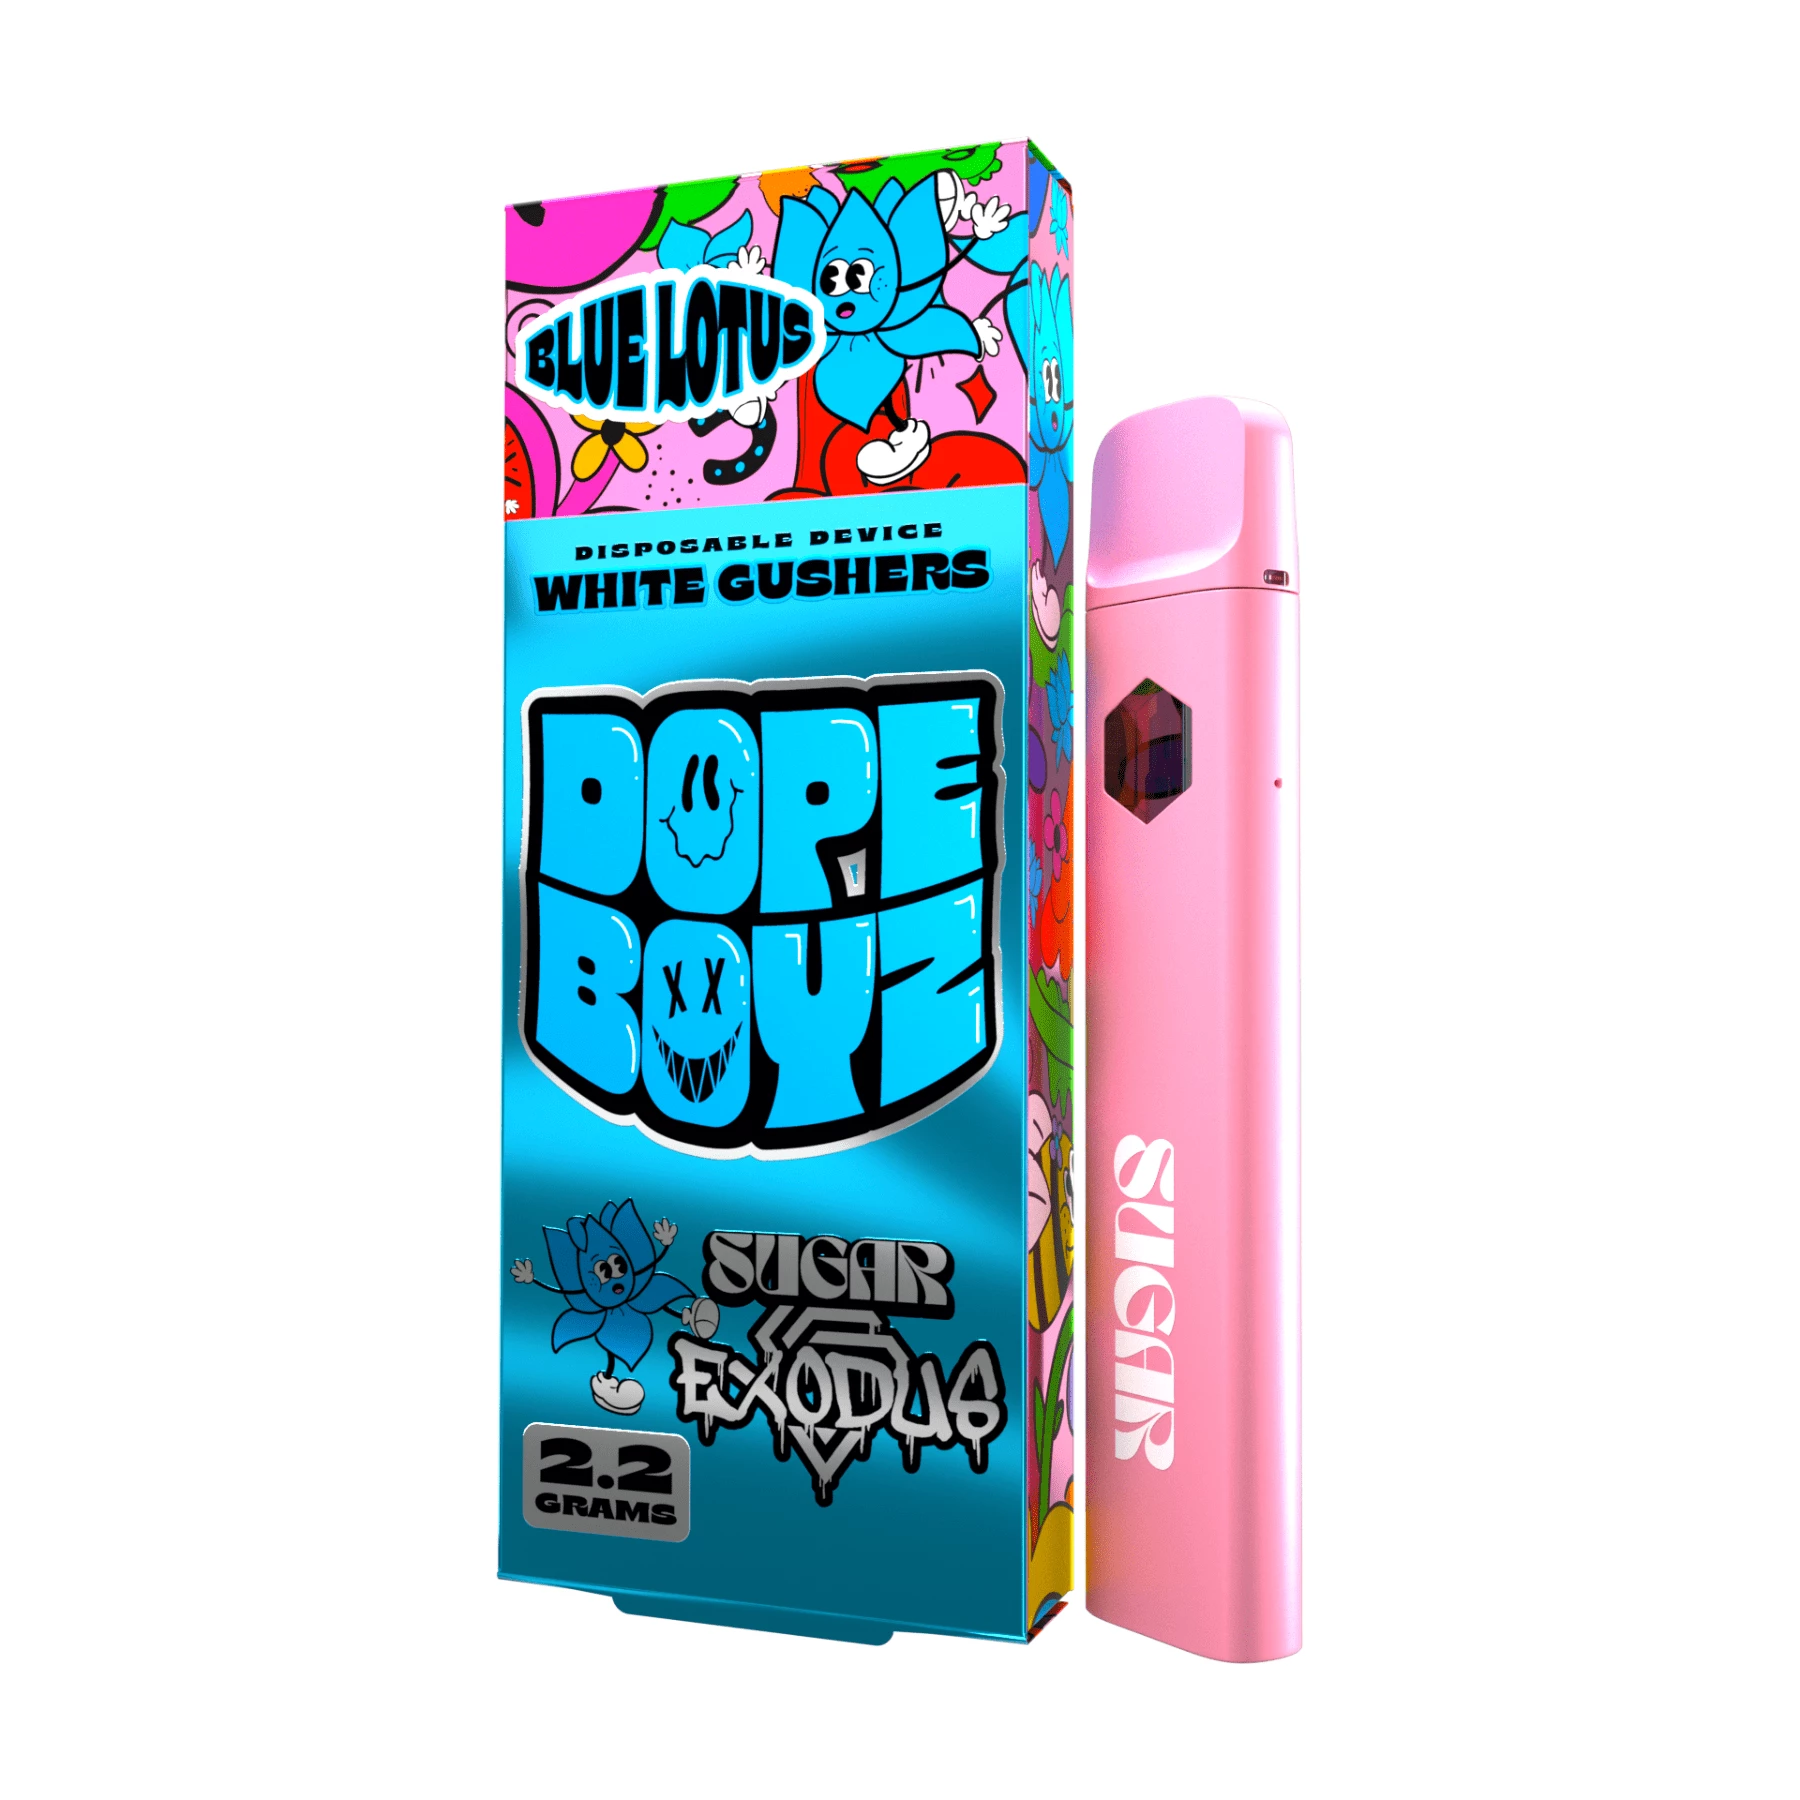 Sugar Exodus Dope Boyz Blue Lotus Disposables (2.2g) in a pink box.